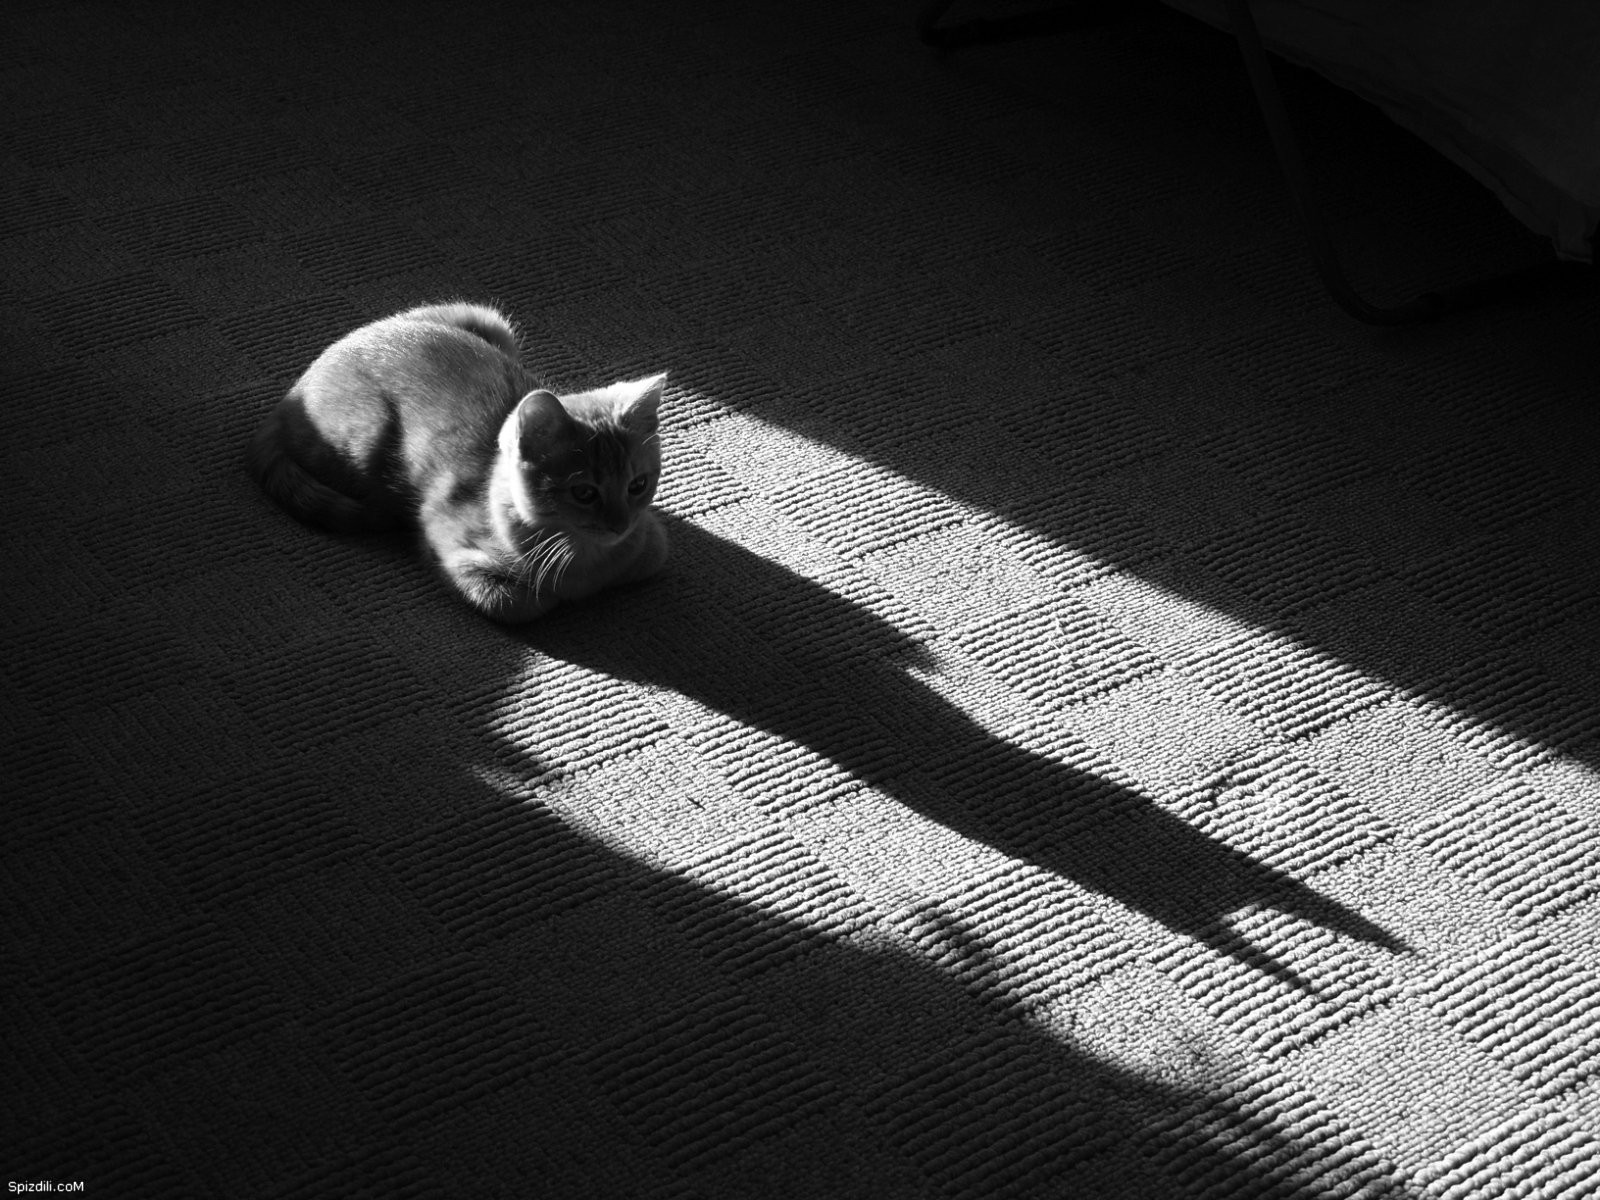 General 1600x1200 cats feline shadow natural light low light monochrome animals mammals